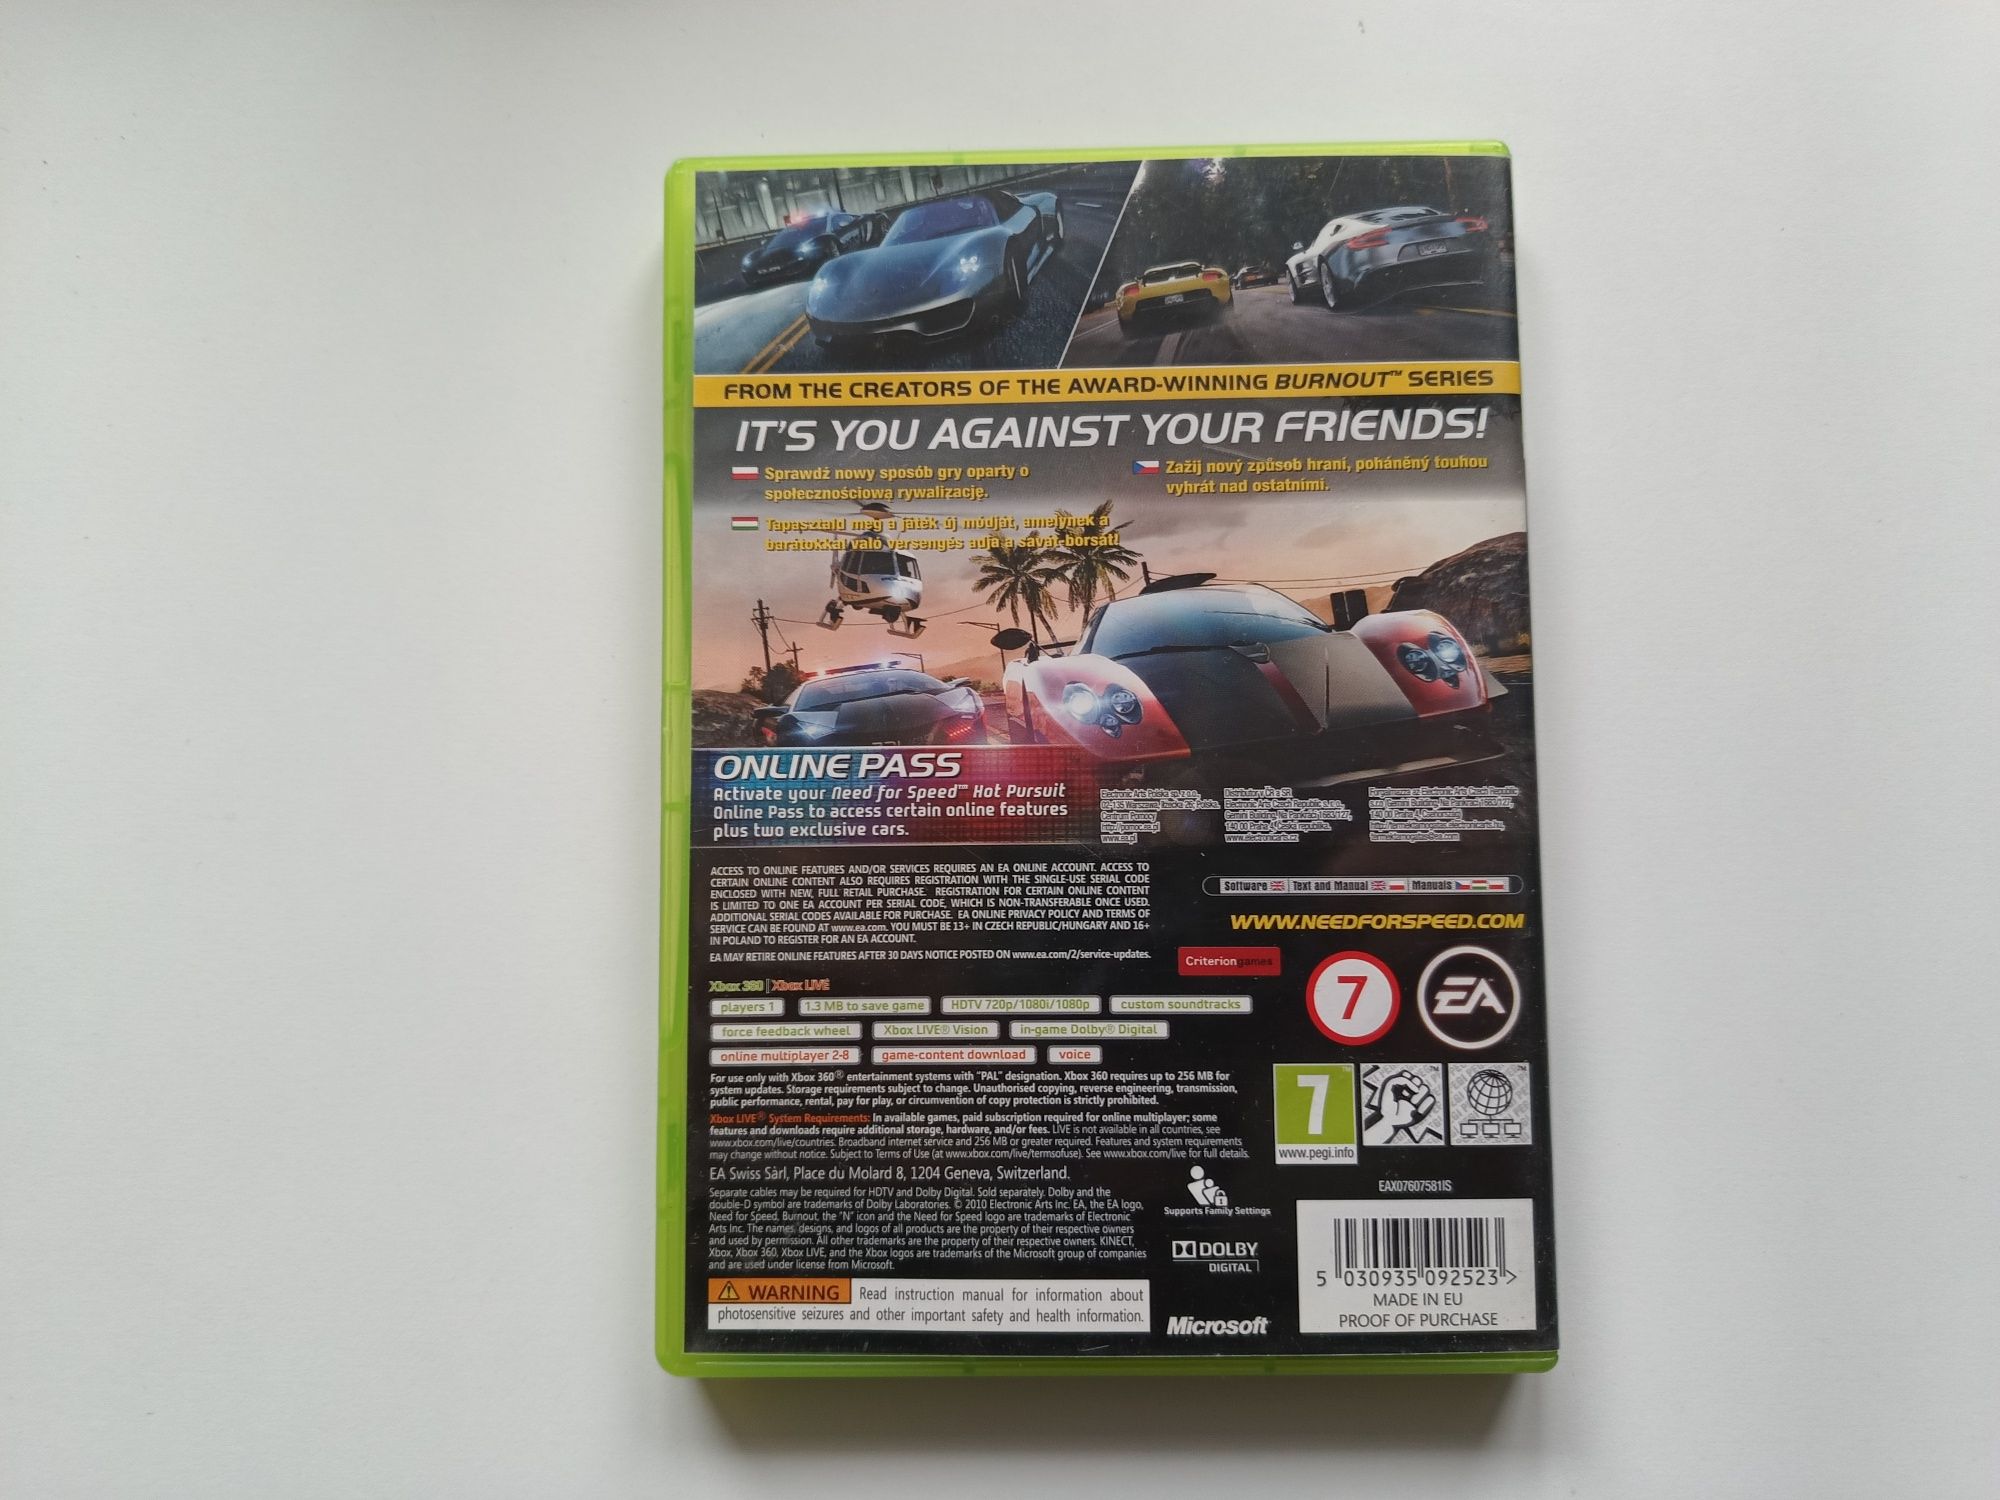 Gra Xbox 360 NFS Hot Pursuit - Polska wersja-